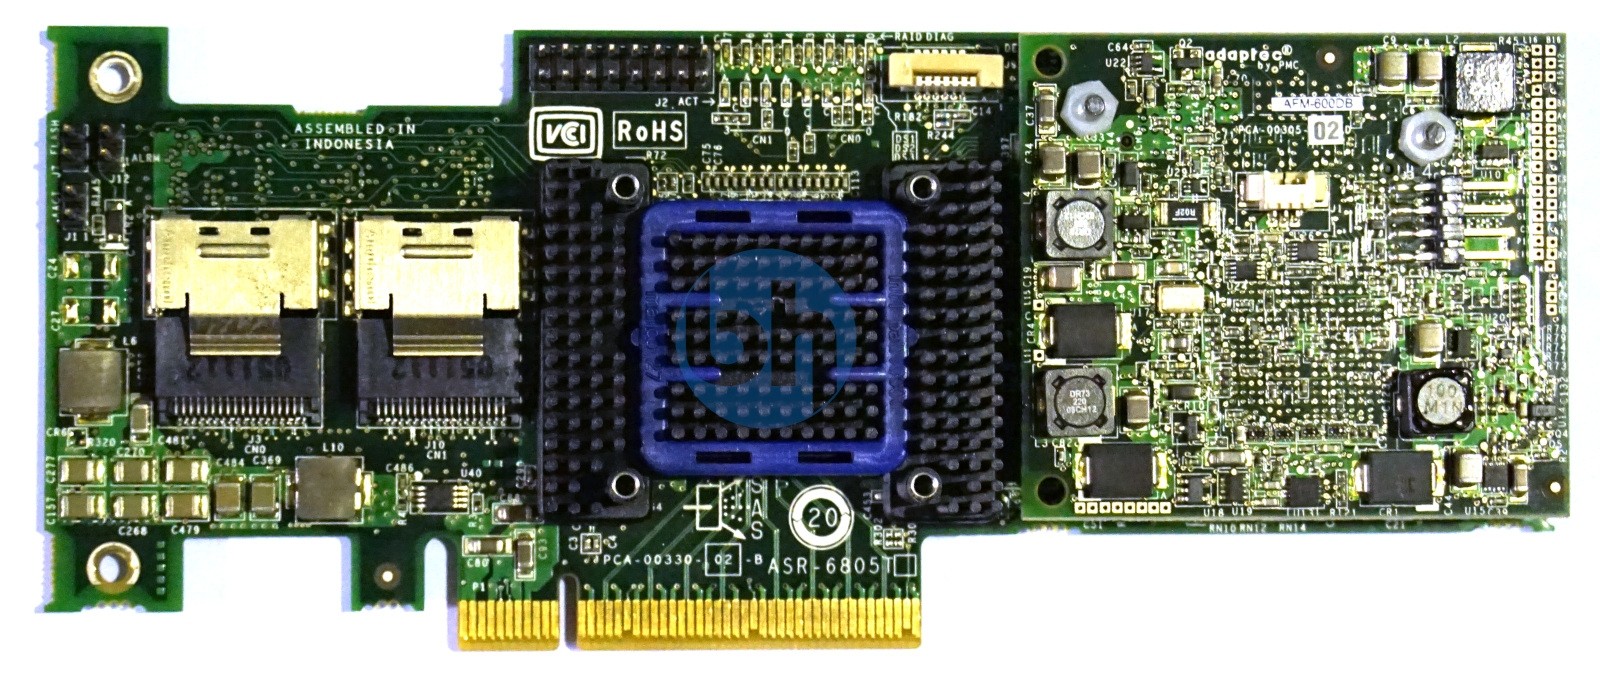 Adaptec ASR-6805T 512MB - Internal PCIe-x8 6Gbps SAS RAID Controller